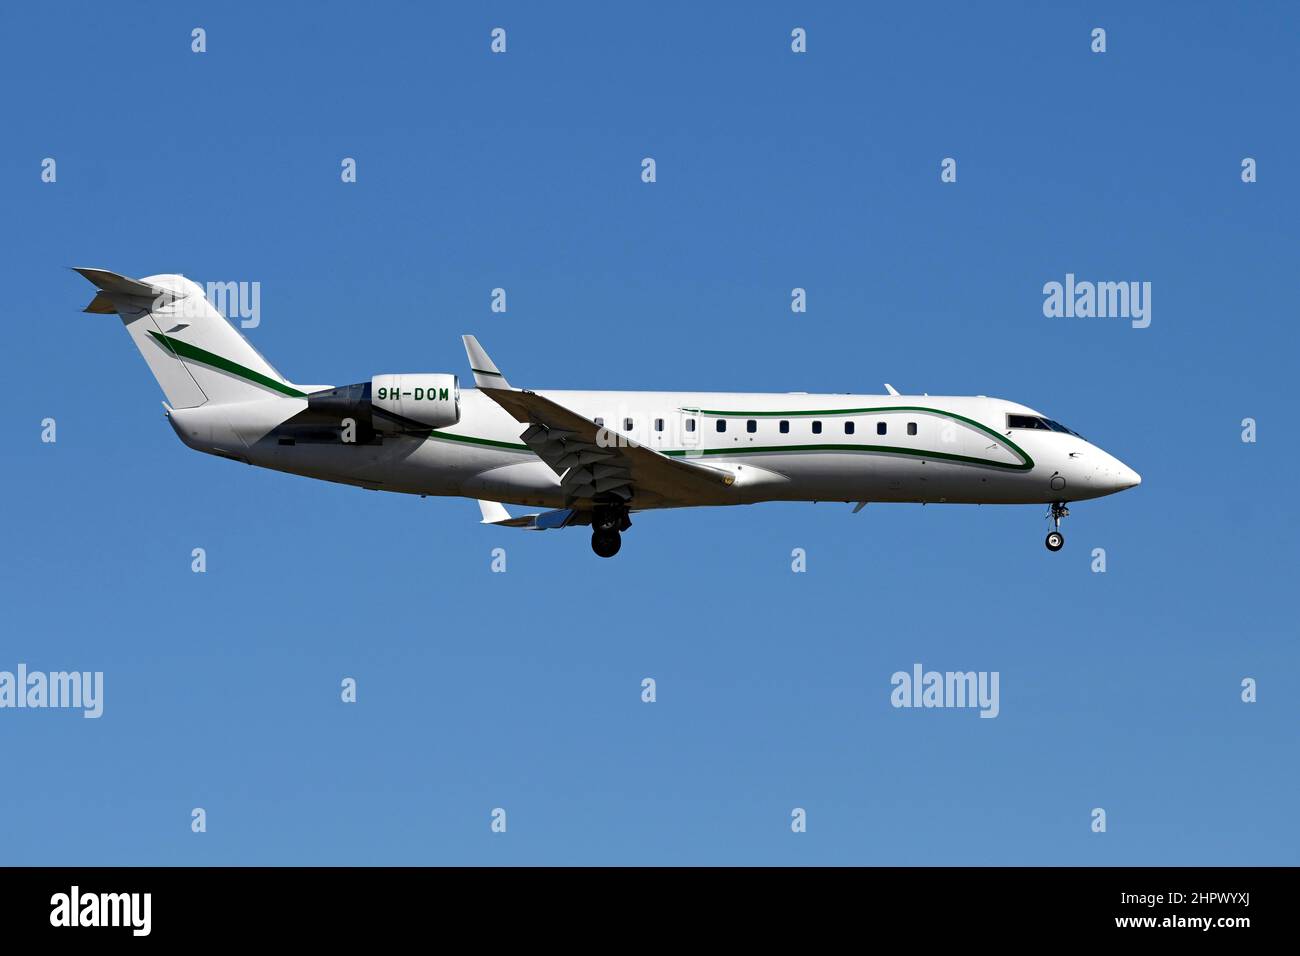 Aircraft AIR X Charter, Bombardier CRJ-200 9H-DOM Stock Photo